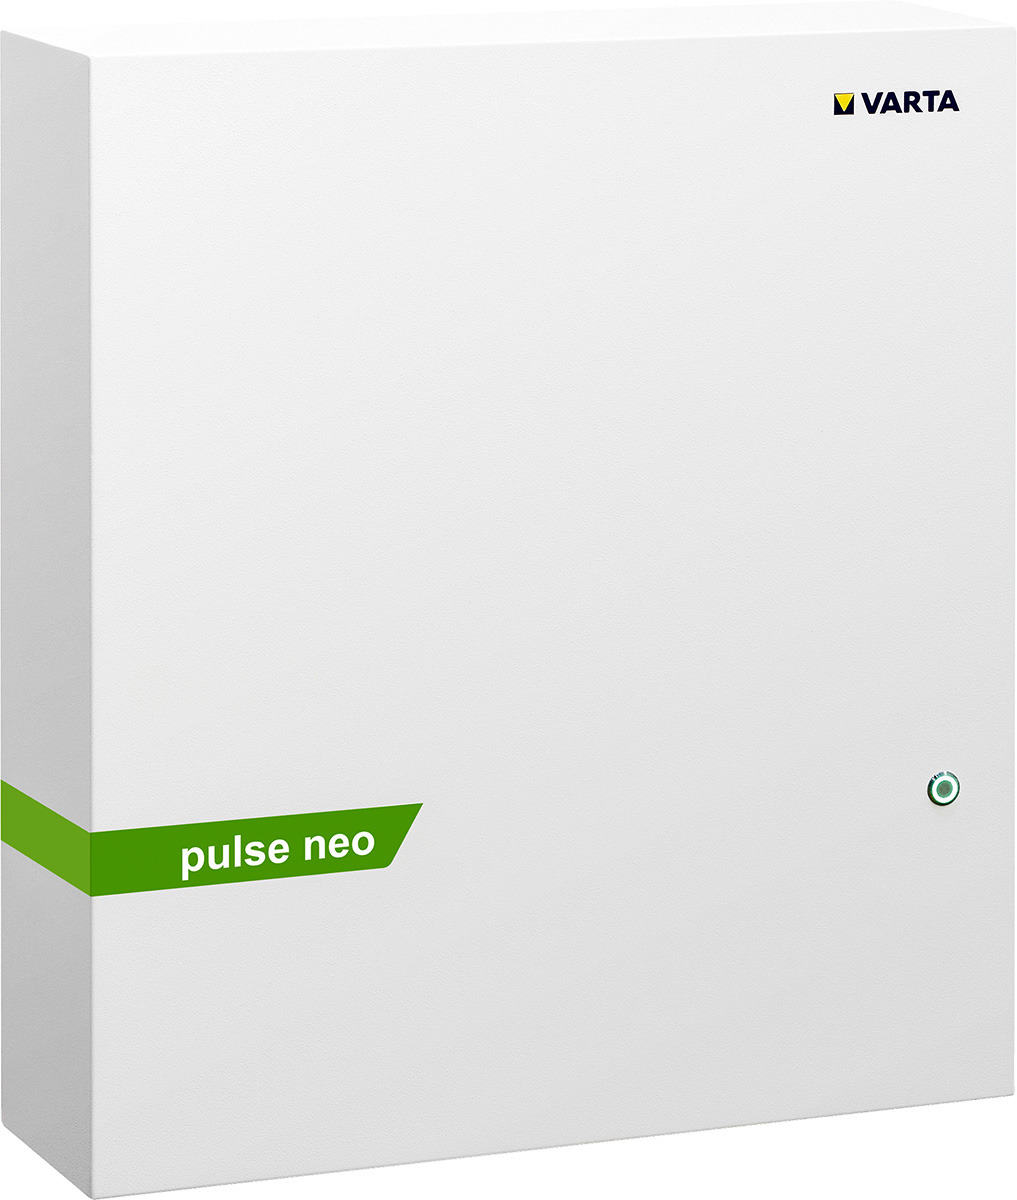 Varta 02707858312 AC-Komplettsystem PULSE NEO 6 inklusive Batteriemodul / PV-Stromspeicher